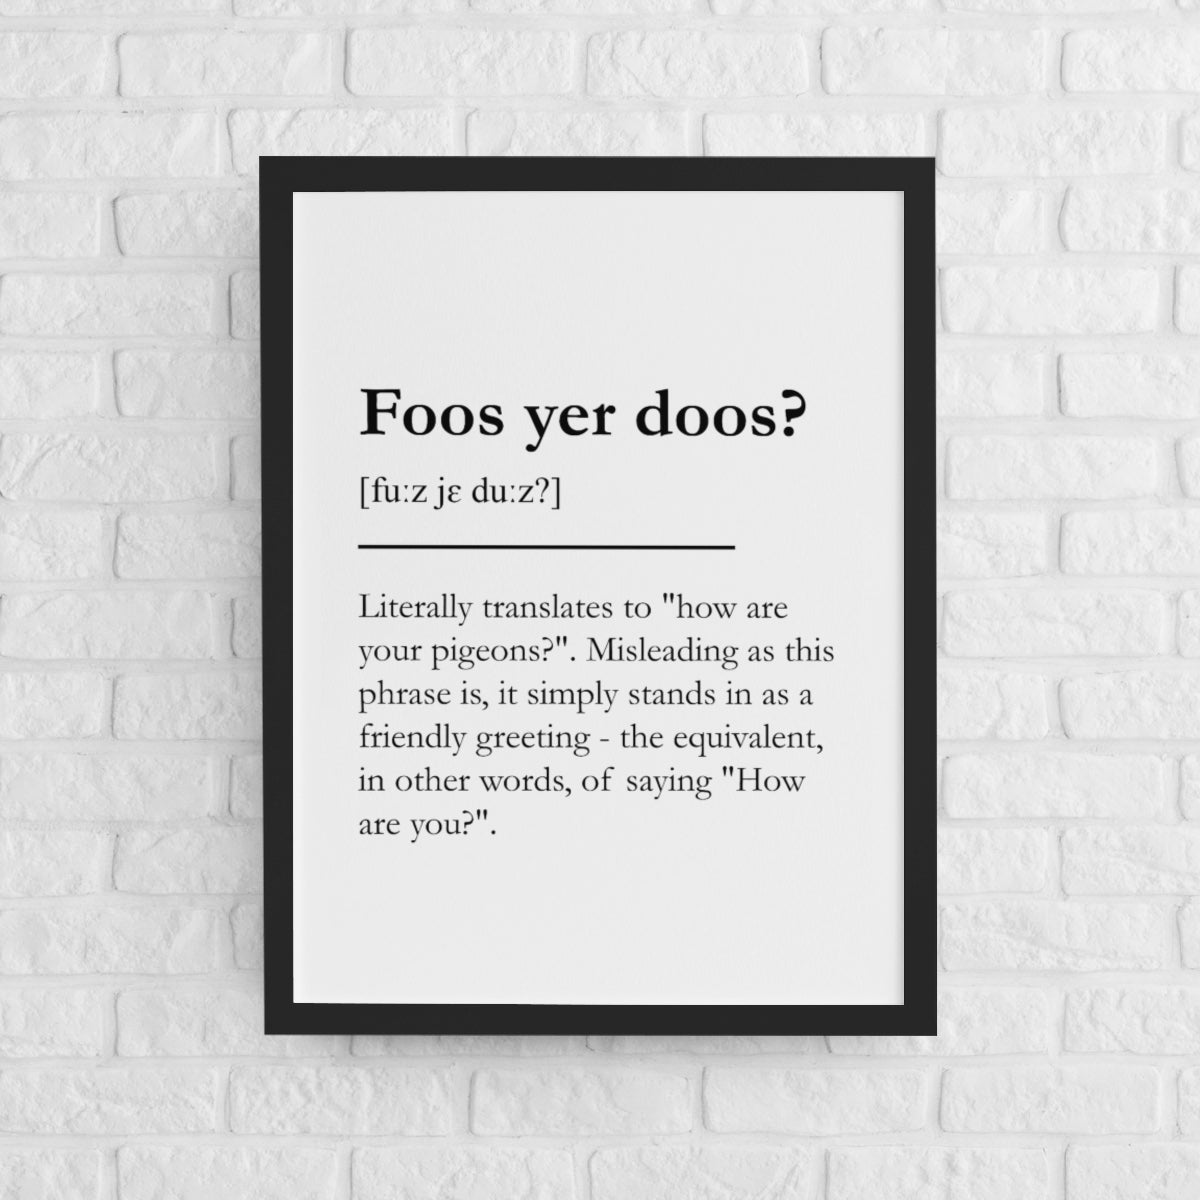 "Foos yer doos?" - Scottish Slang